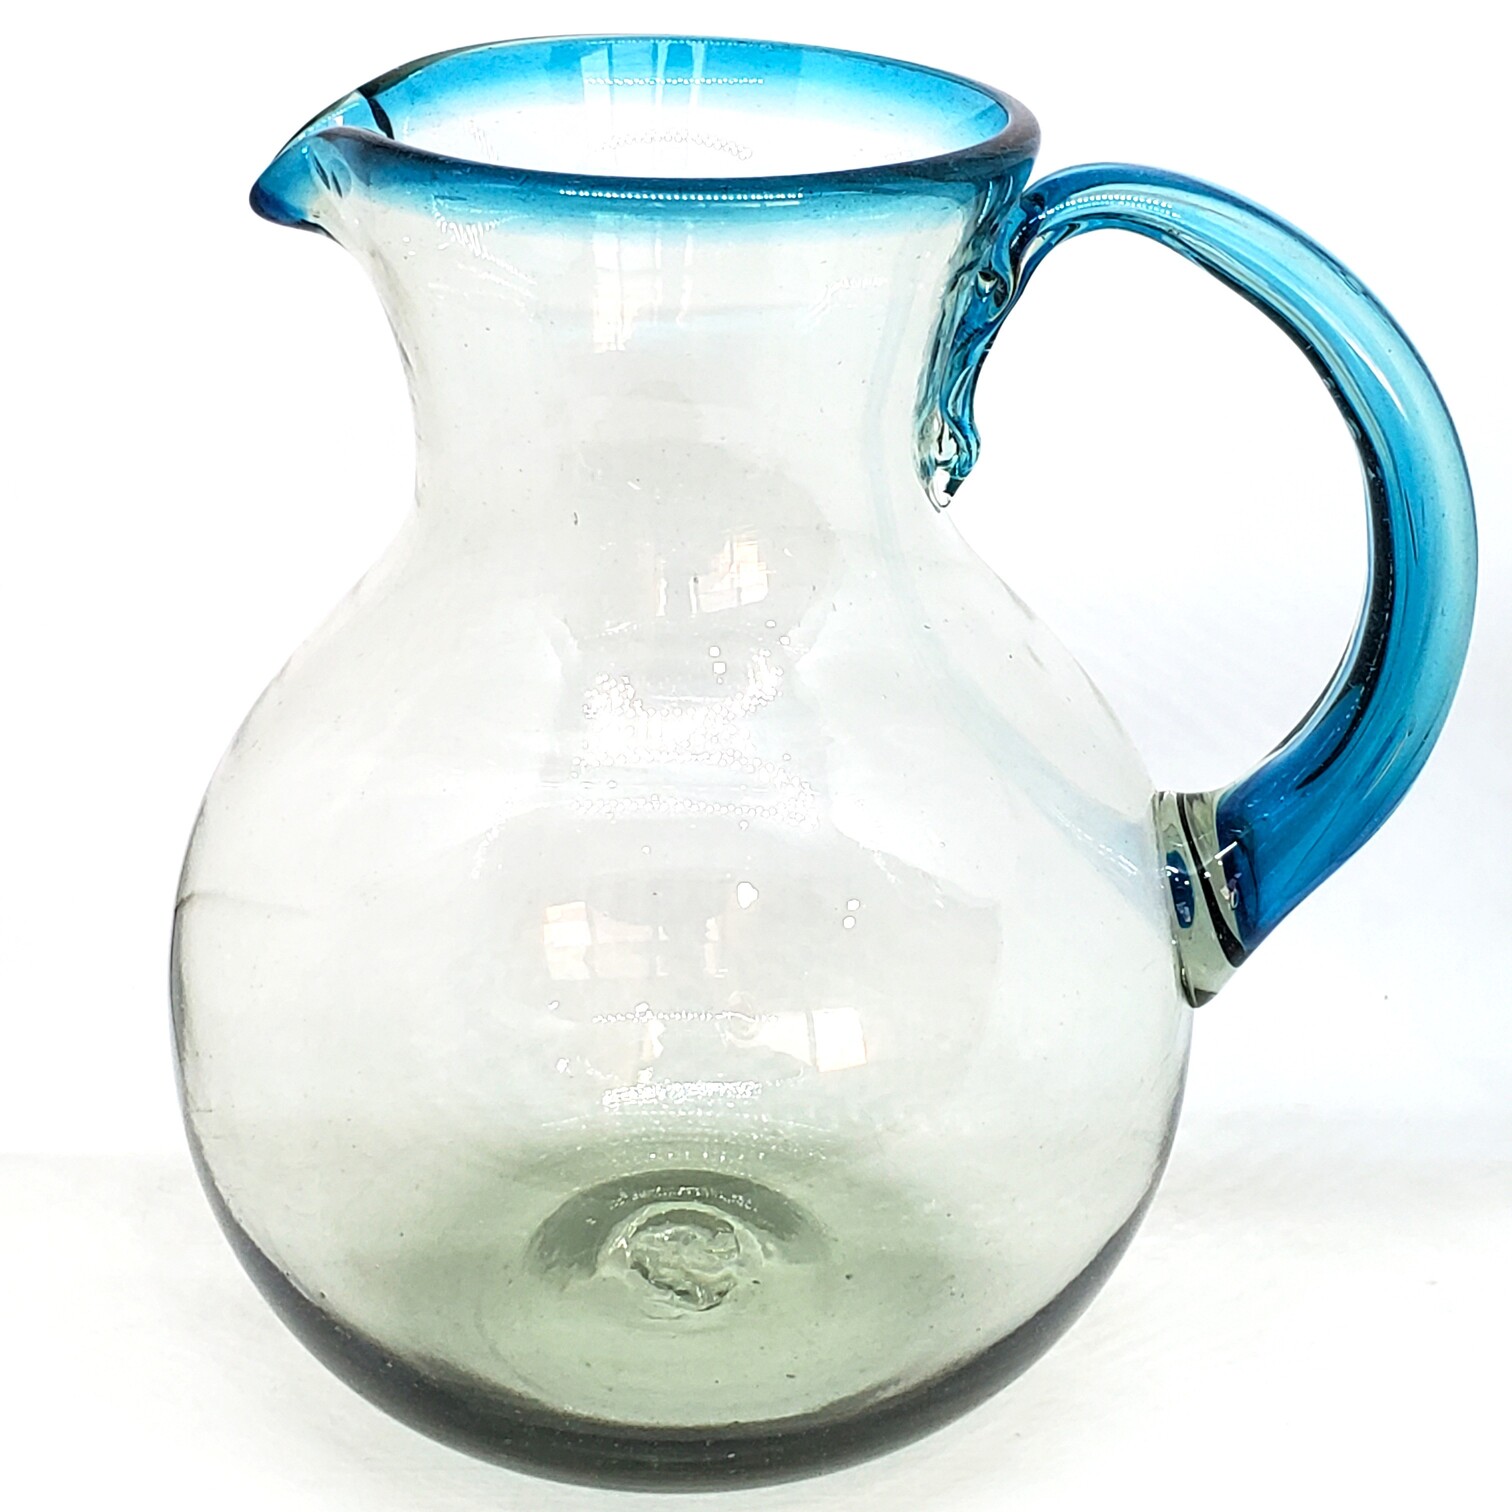 Wholesale Colored Rim Glassware / Aqua Blue Rim 120 oz Large Bola Pitcher / This modern pitcher is decorated with an aqua blue rim.